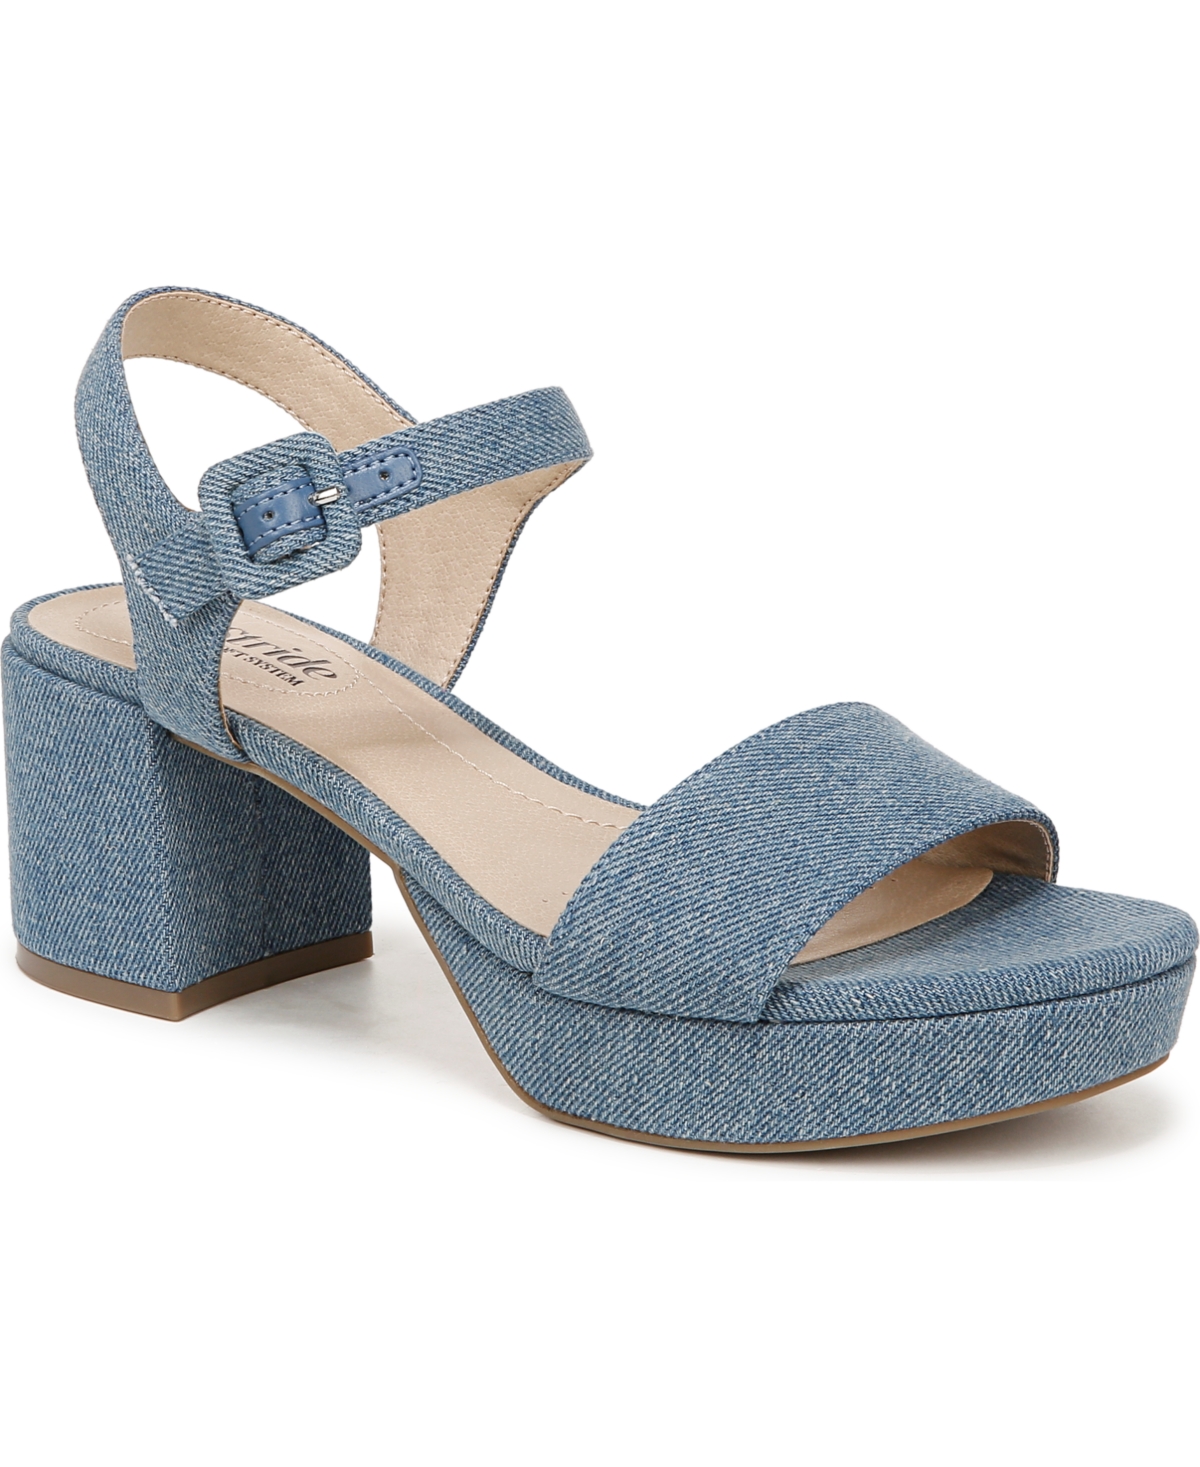 Women's Rhythmn Platform Block Heel Sandals - Blue Denim Fabric